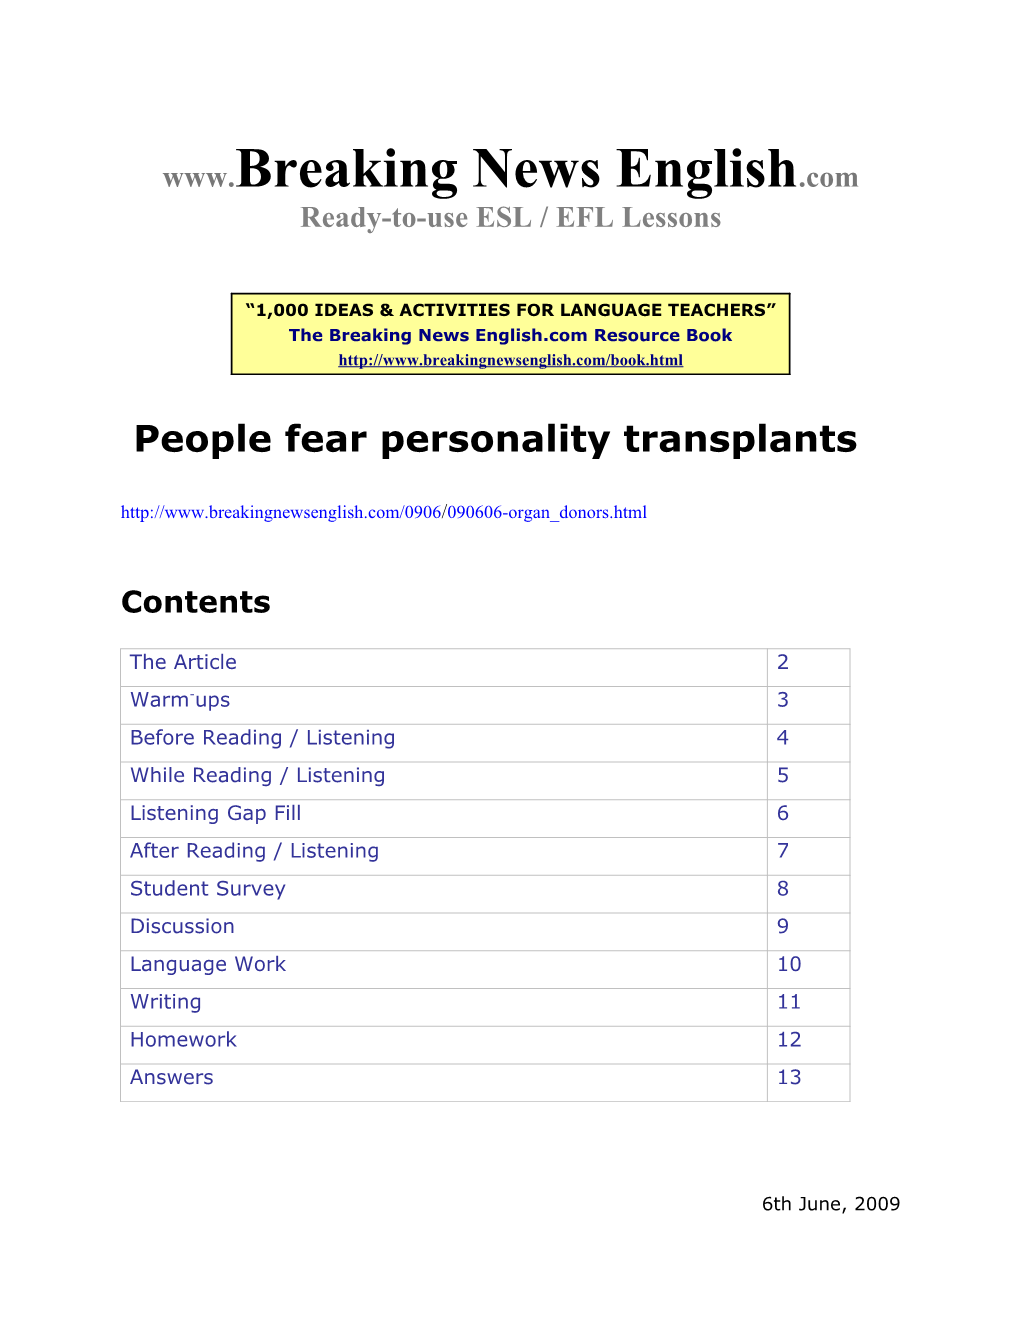 ESL Lesson: People Fear Personality Transplants